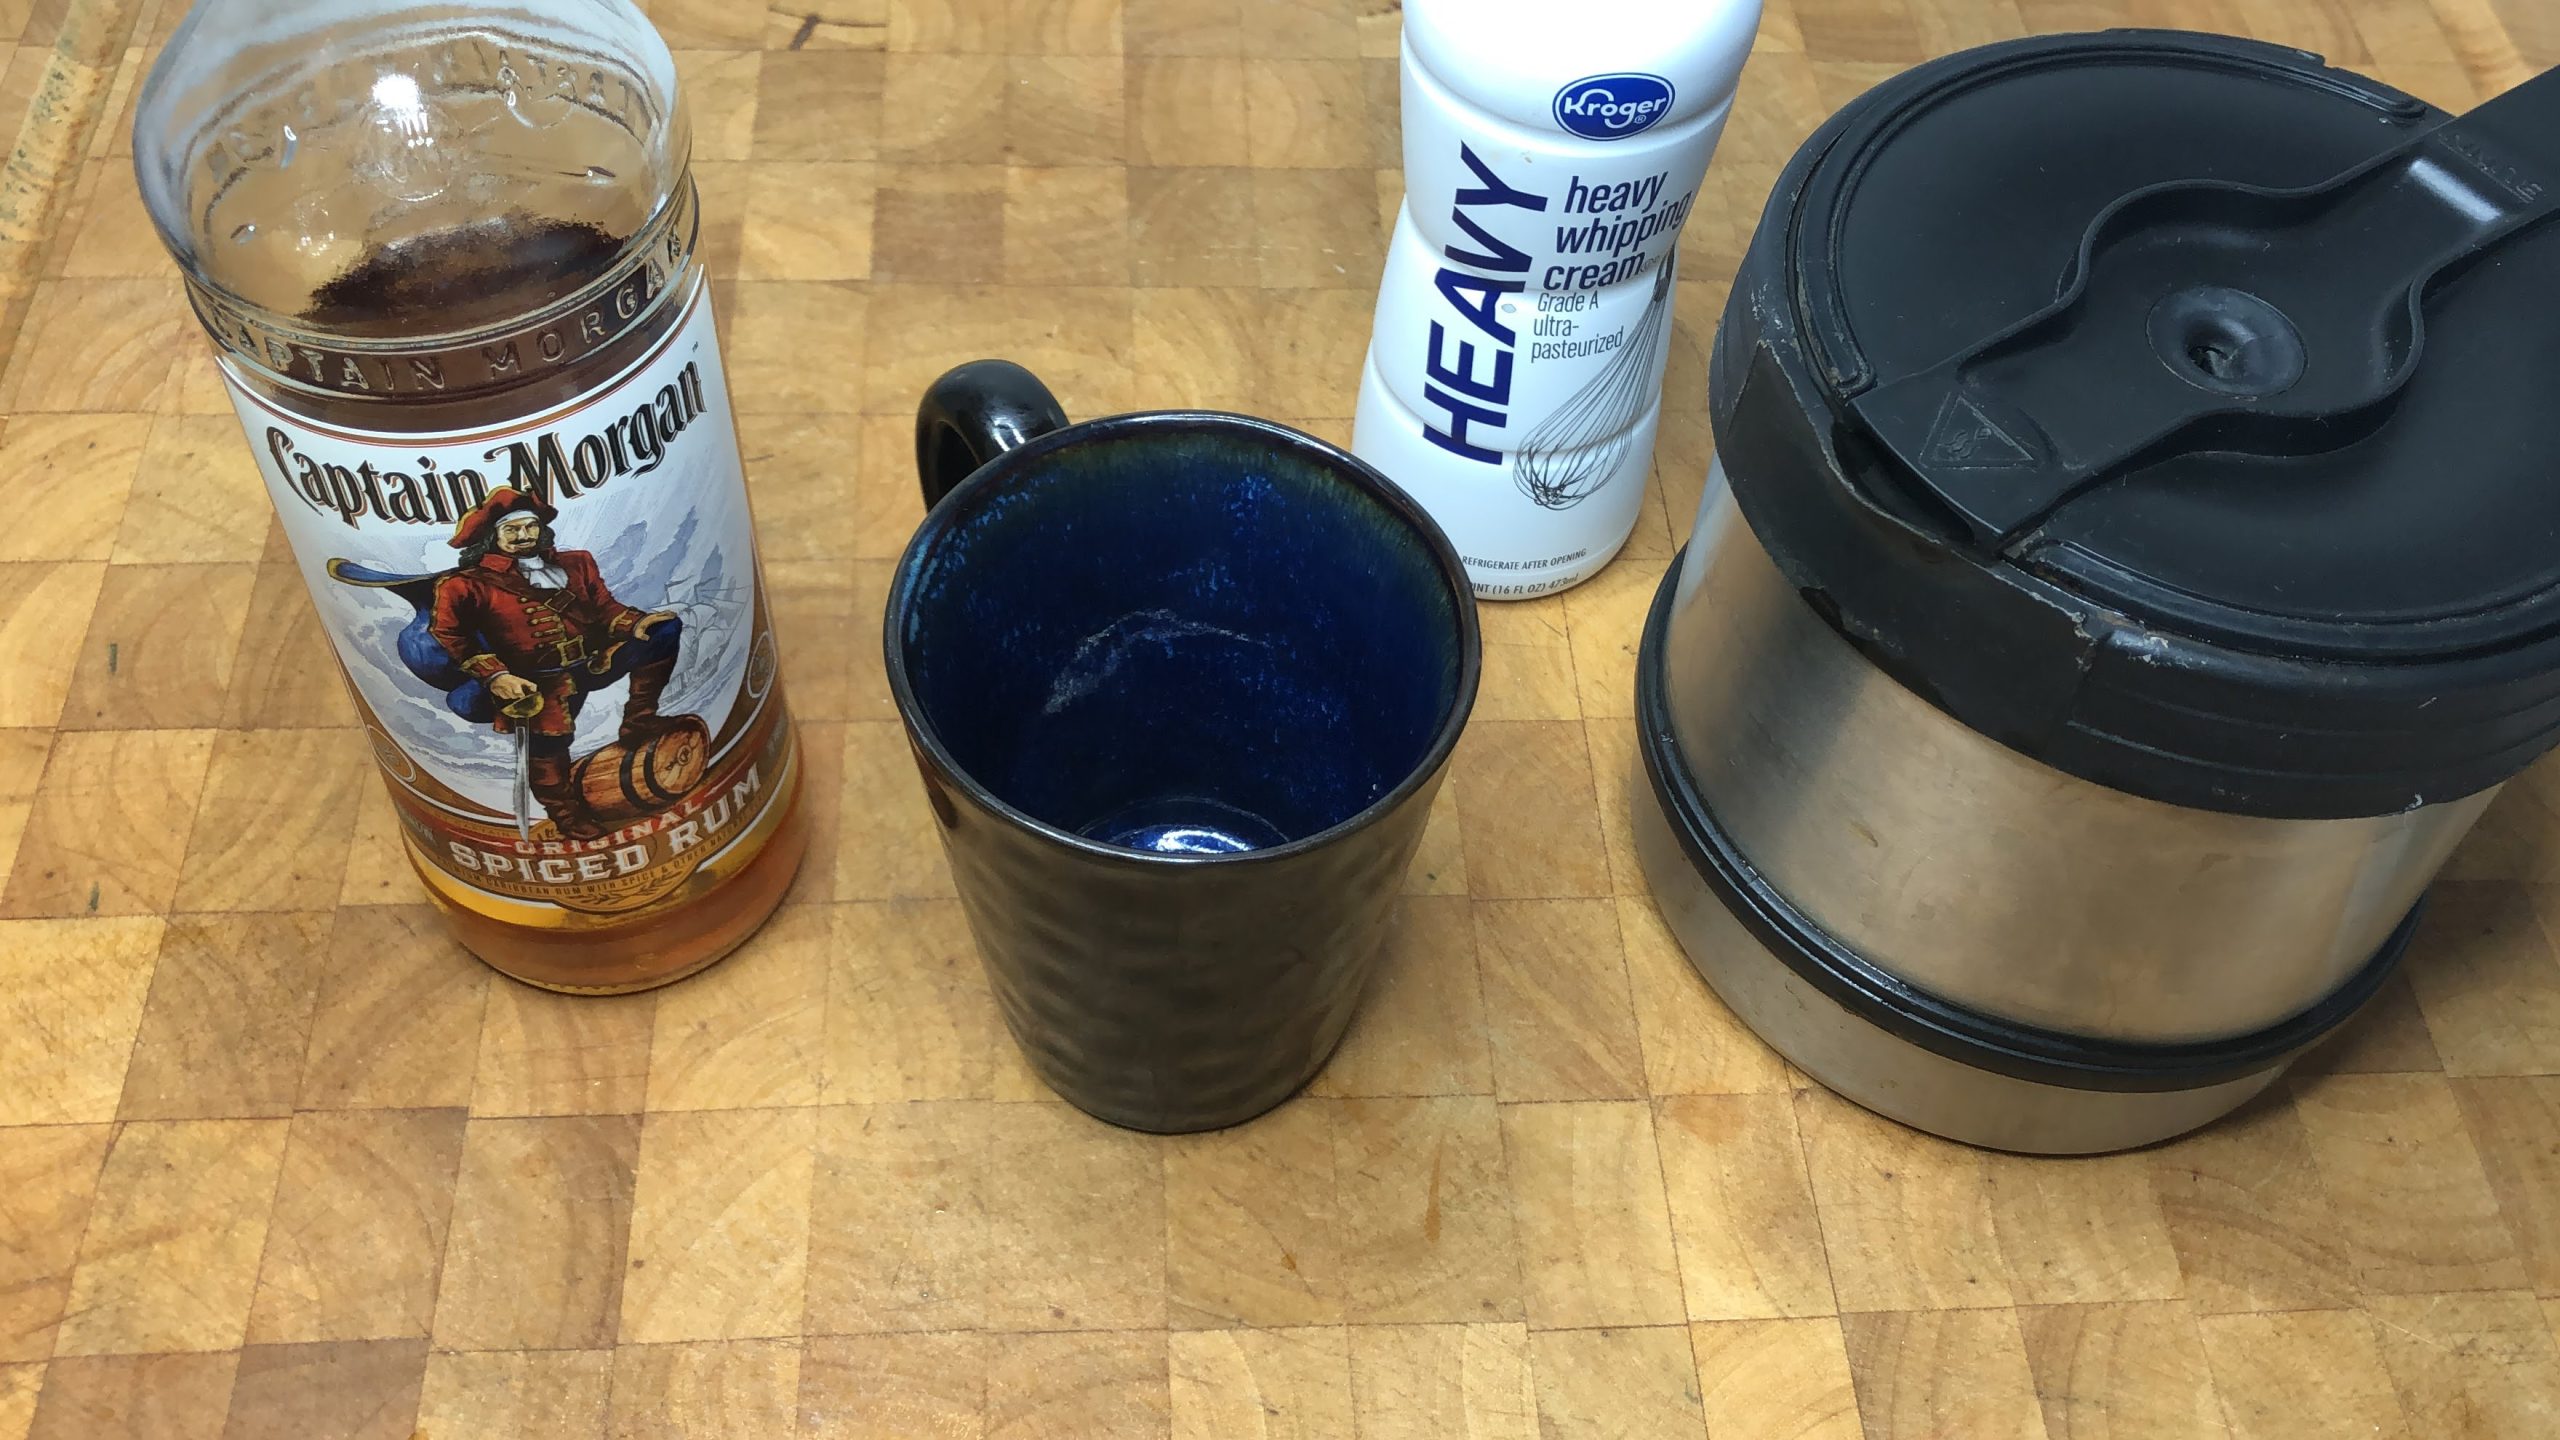 coffee mug next to coffee pot, heavy cream and spiced rum